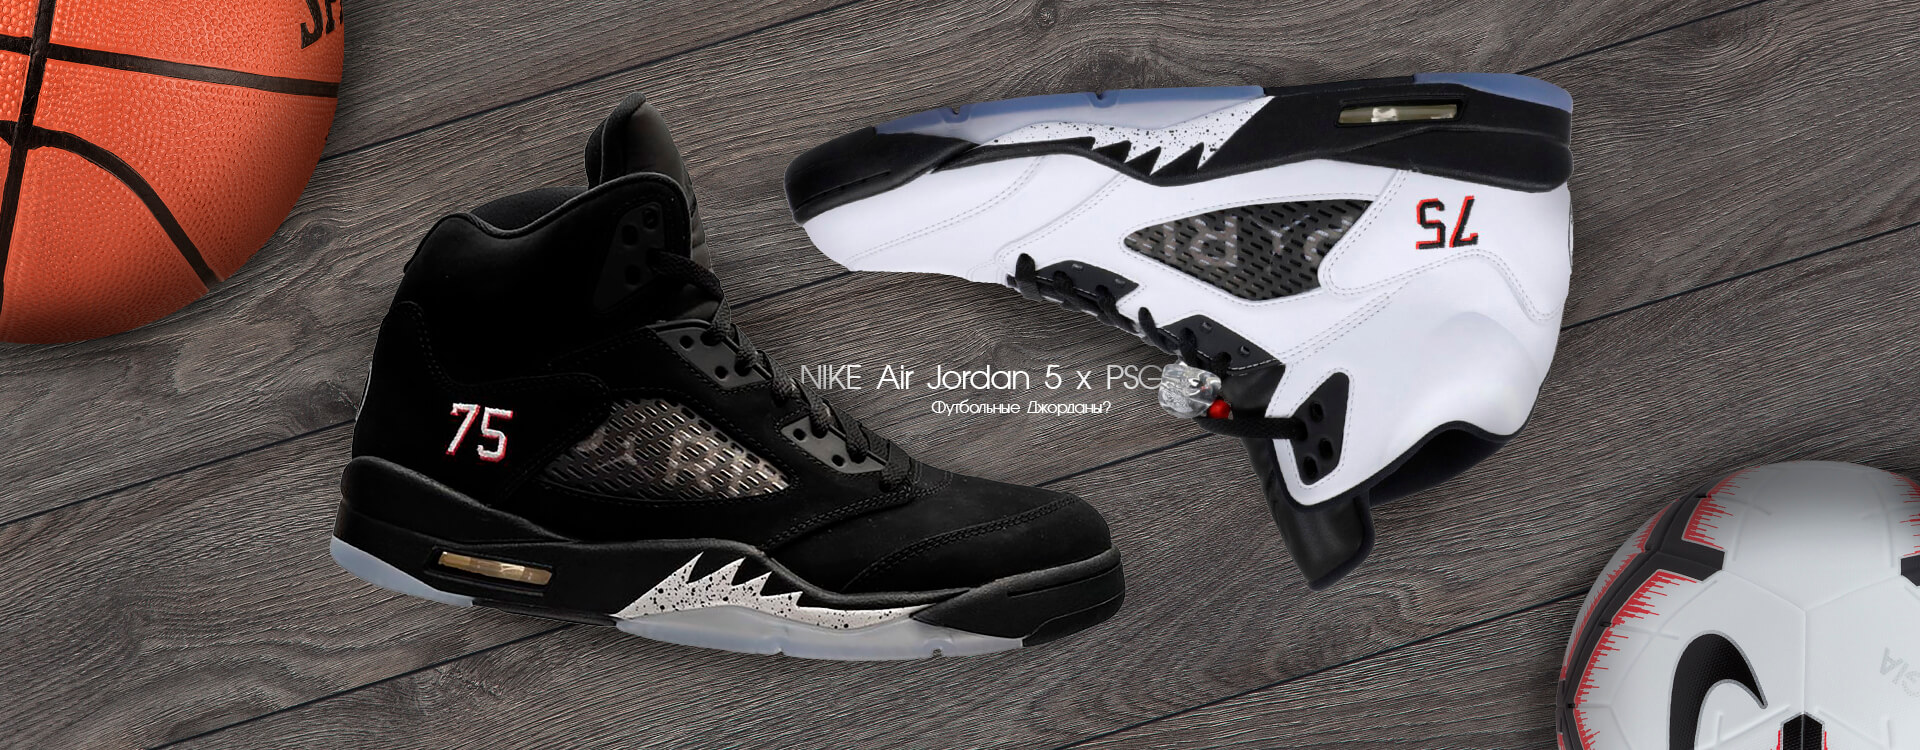 Nike Air Jordan 5 PSG